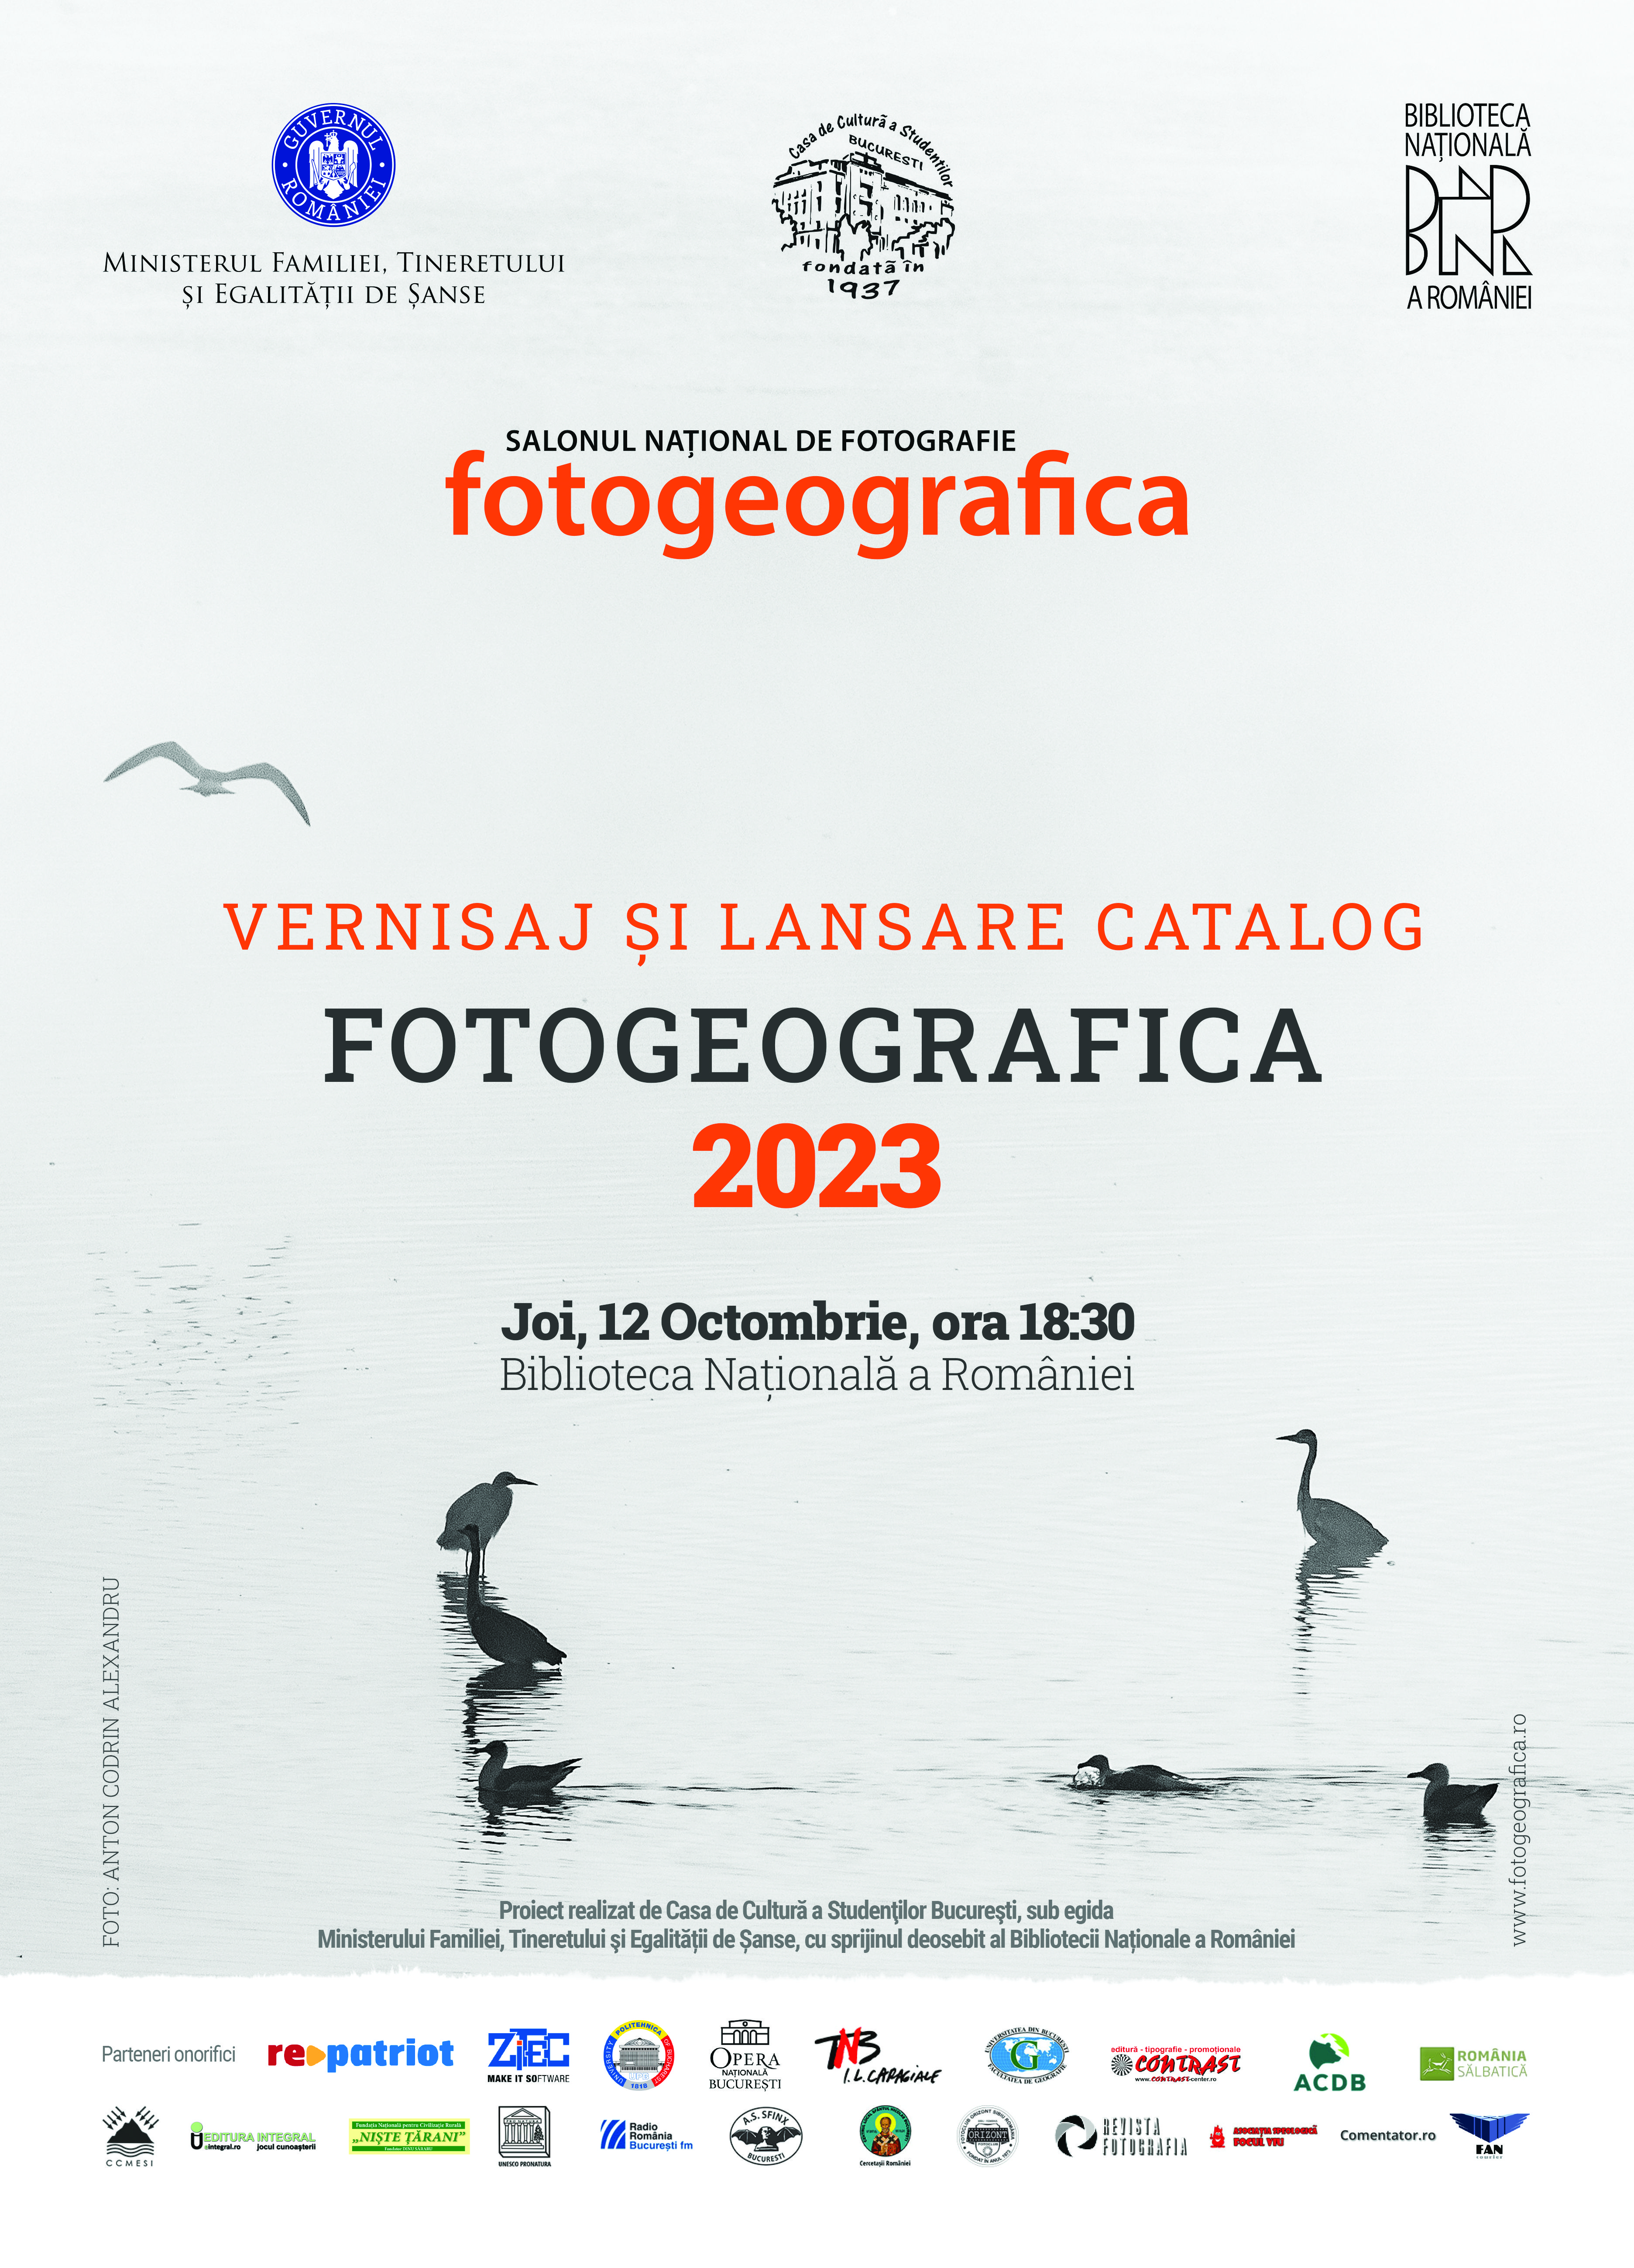 3. Poster FOTOGEOGRAFICA 2023